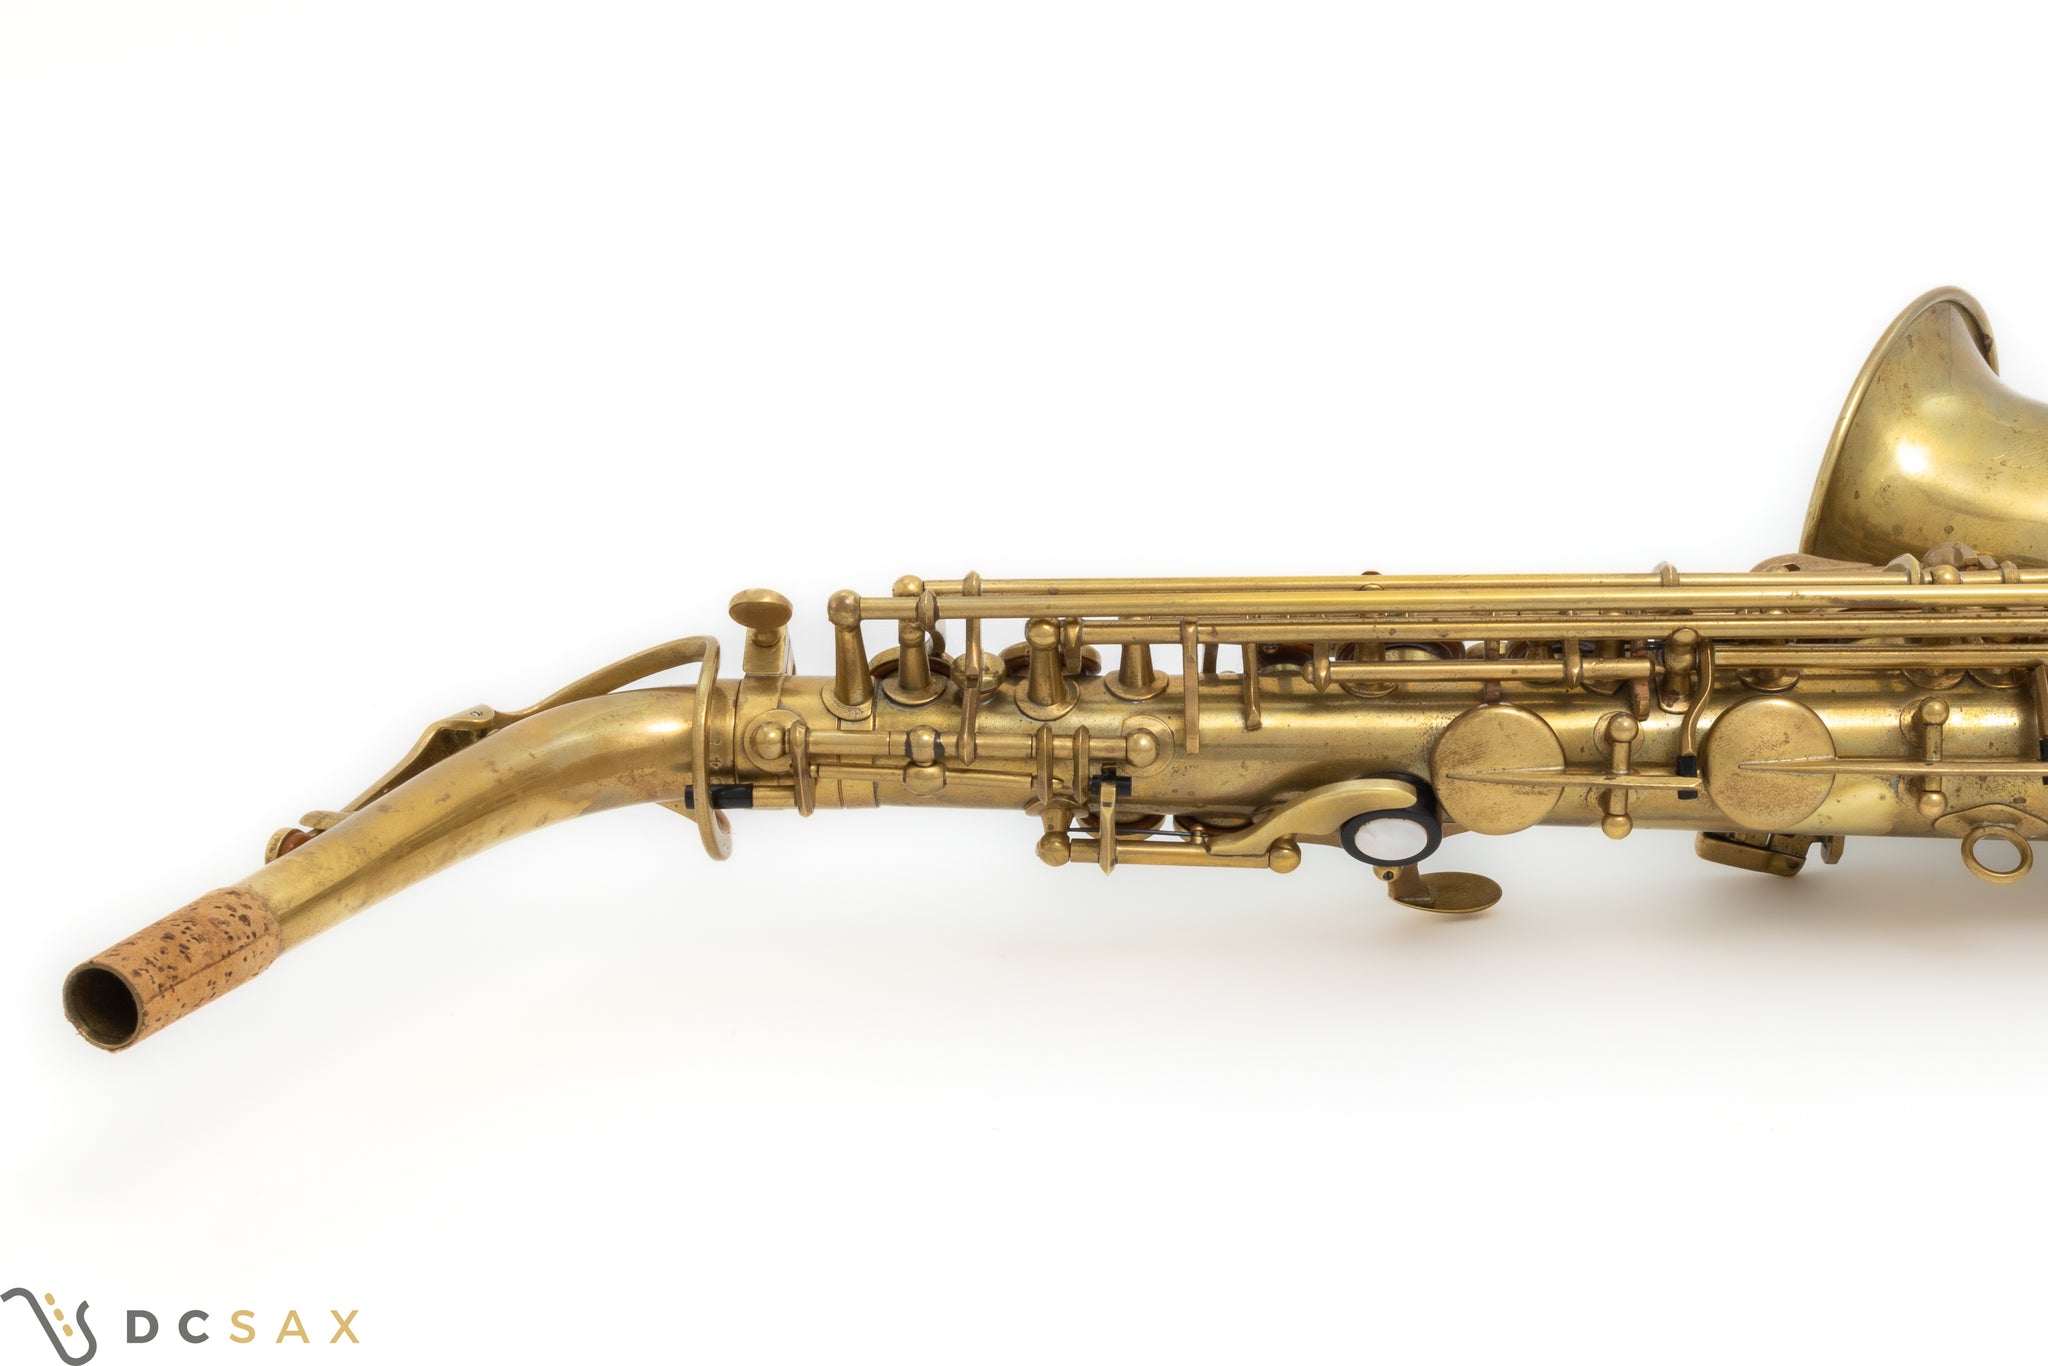 Rampone and Cazzani R1 Jazz Alto Saxophone, Video, Just Serviced